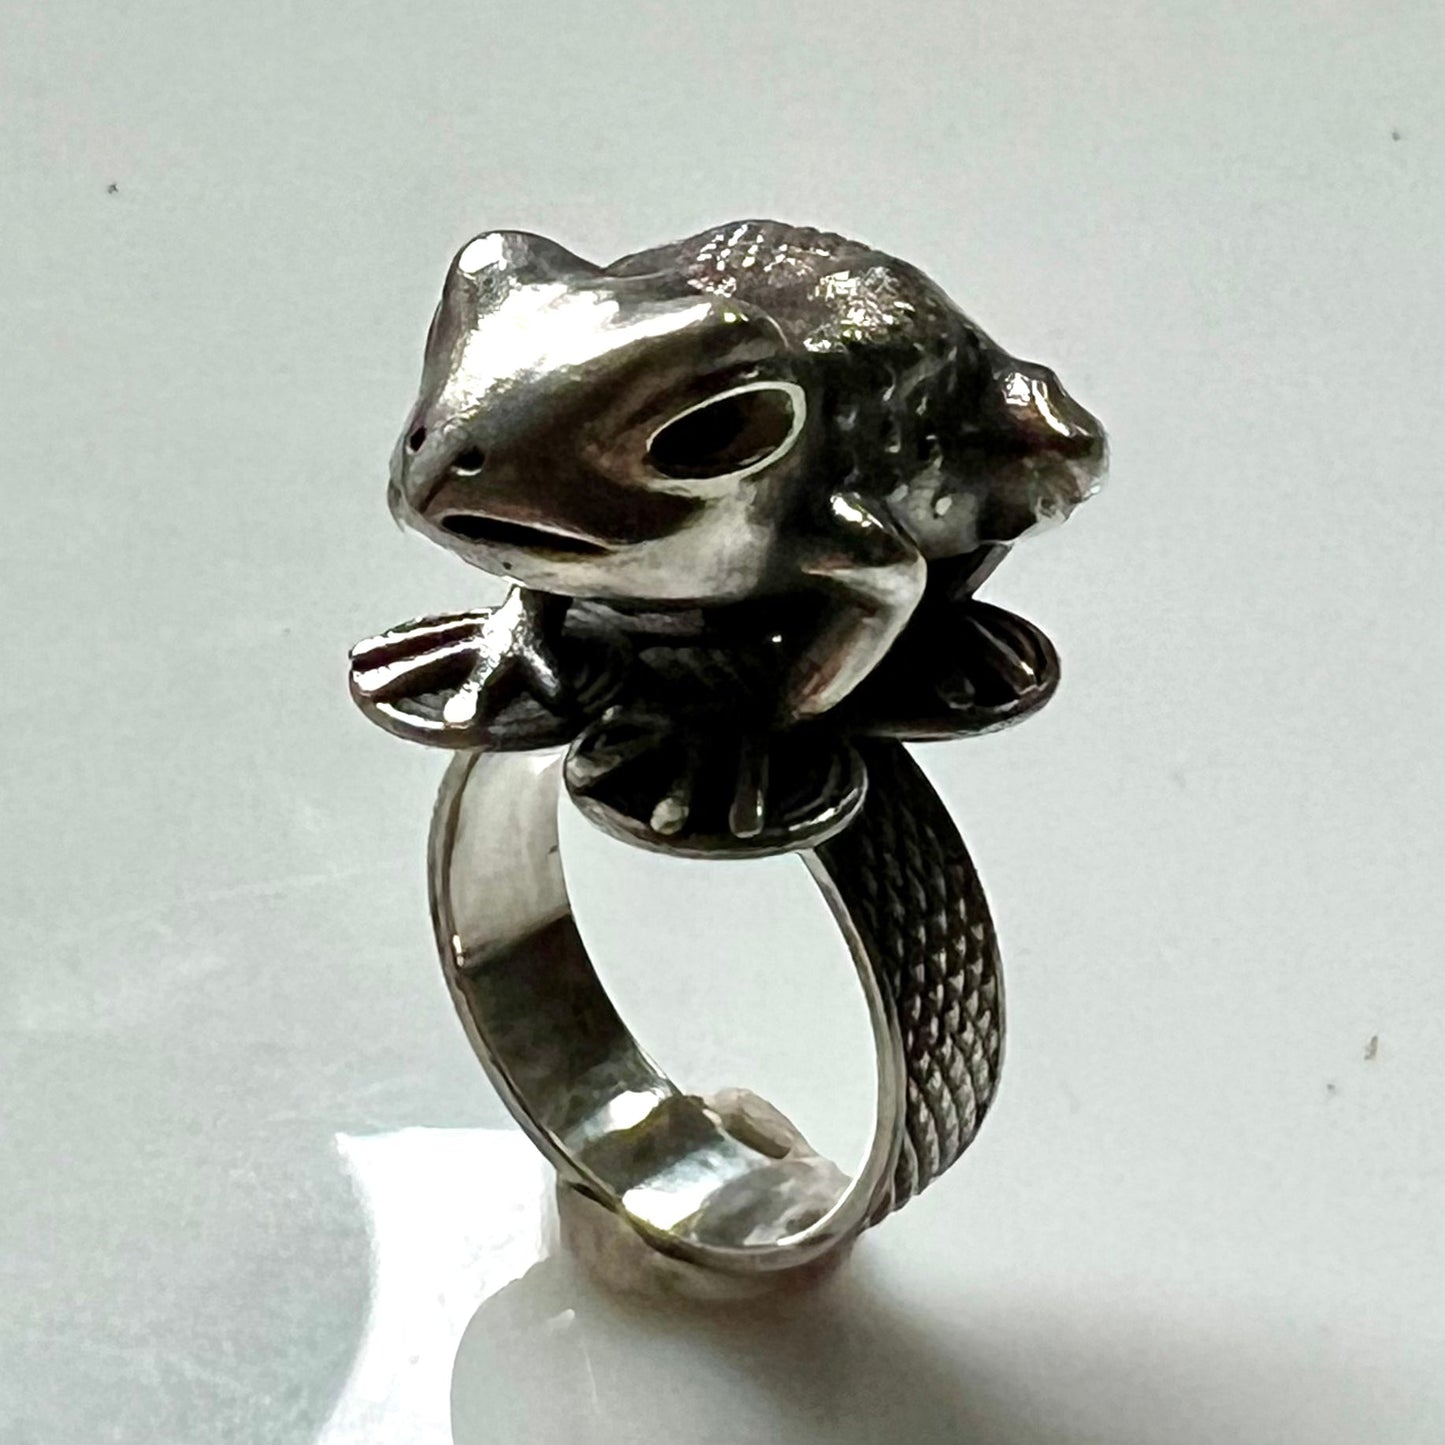 Asante Frog Mpetea (Chief's Ring) - Silver